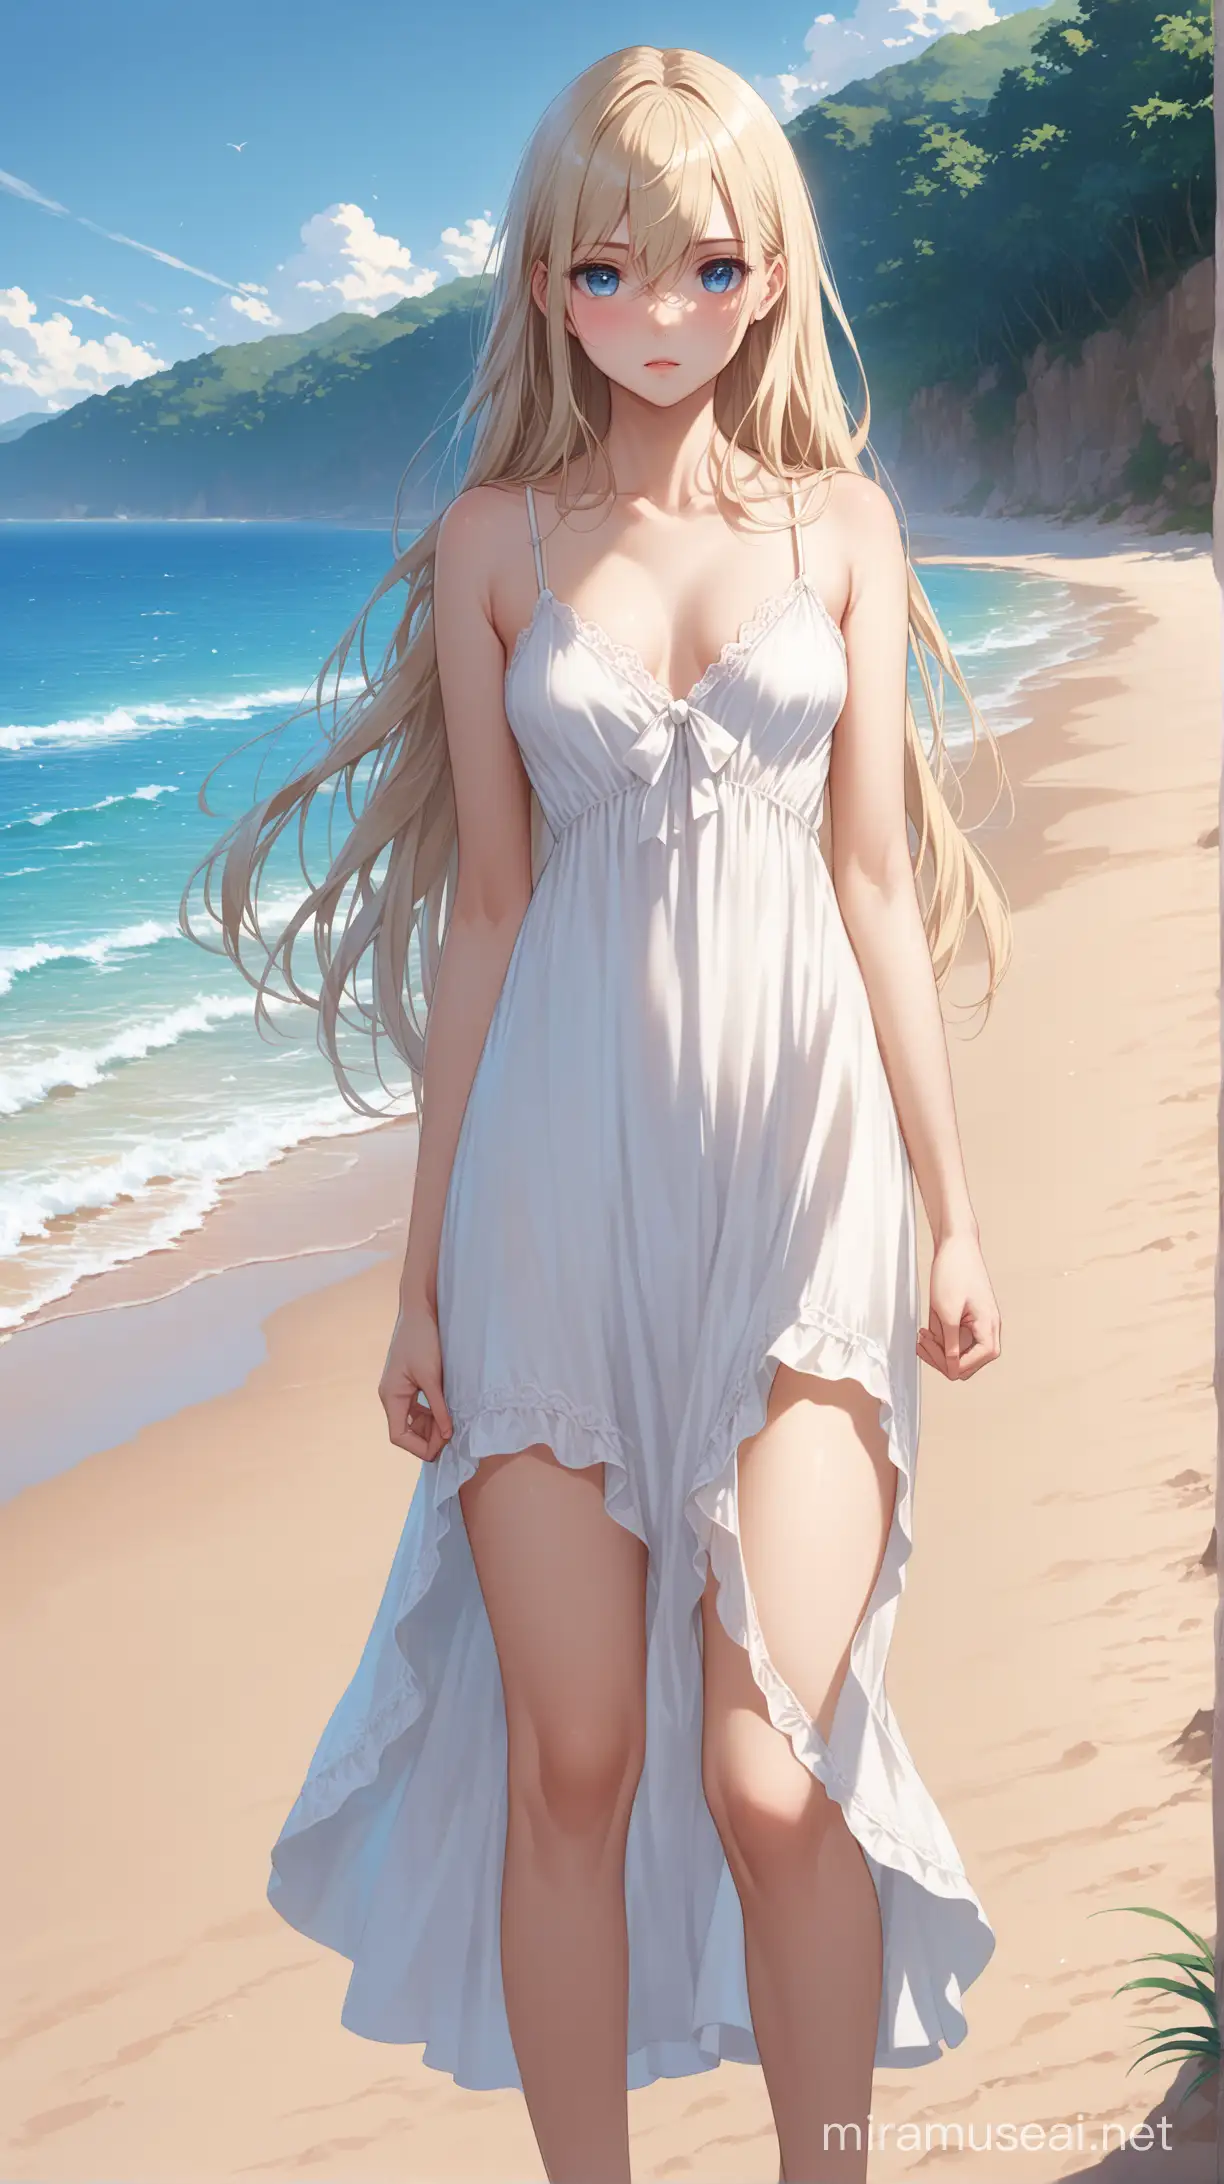 Summer Beach Portrait Blonde Woman in White Dress Standing Barefoot